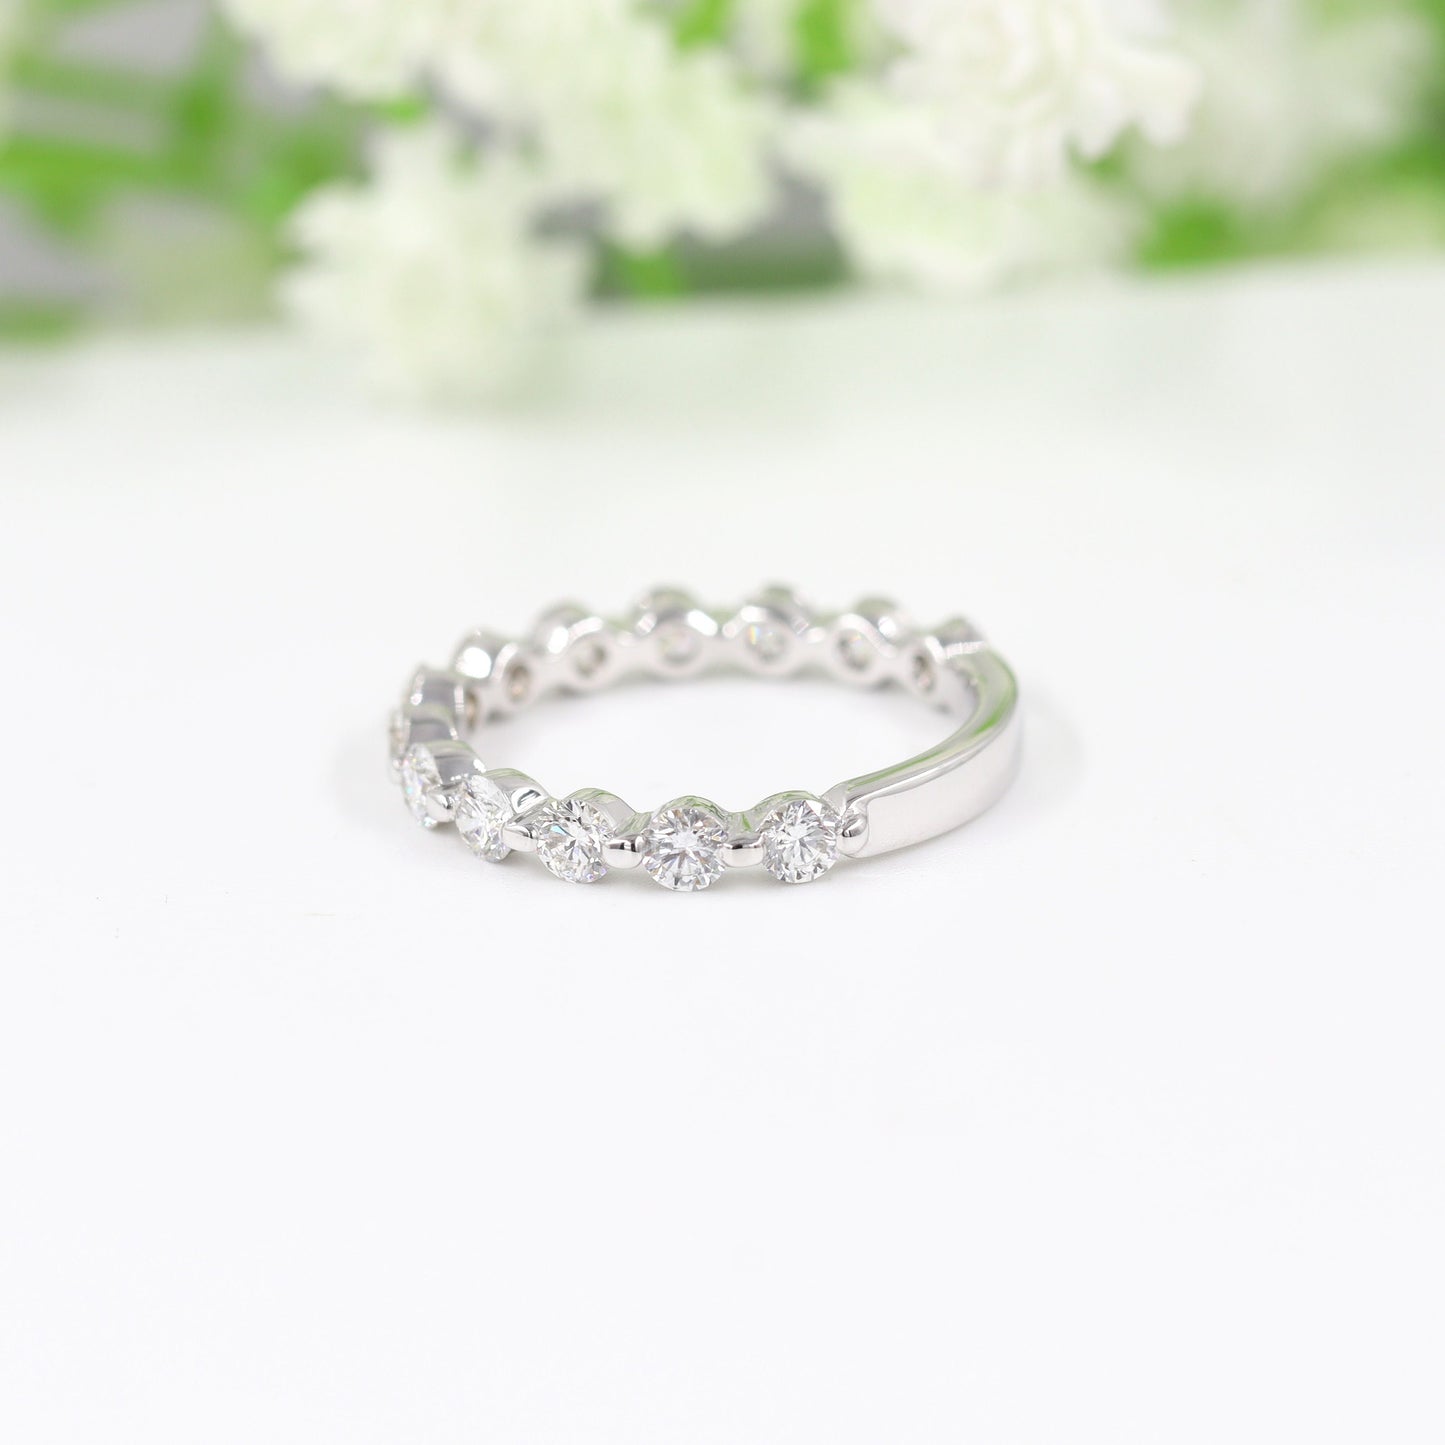 1ct Diamond Ring/13stones diamond Wedding Band/Stackable Single Prong Diamond Ring/Half Eternity Diamond Ring/Gift for her/Anniversary Gift